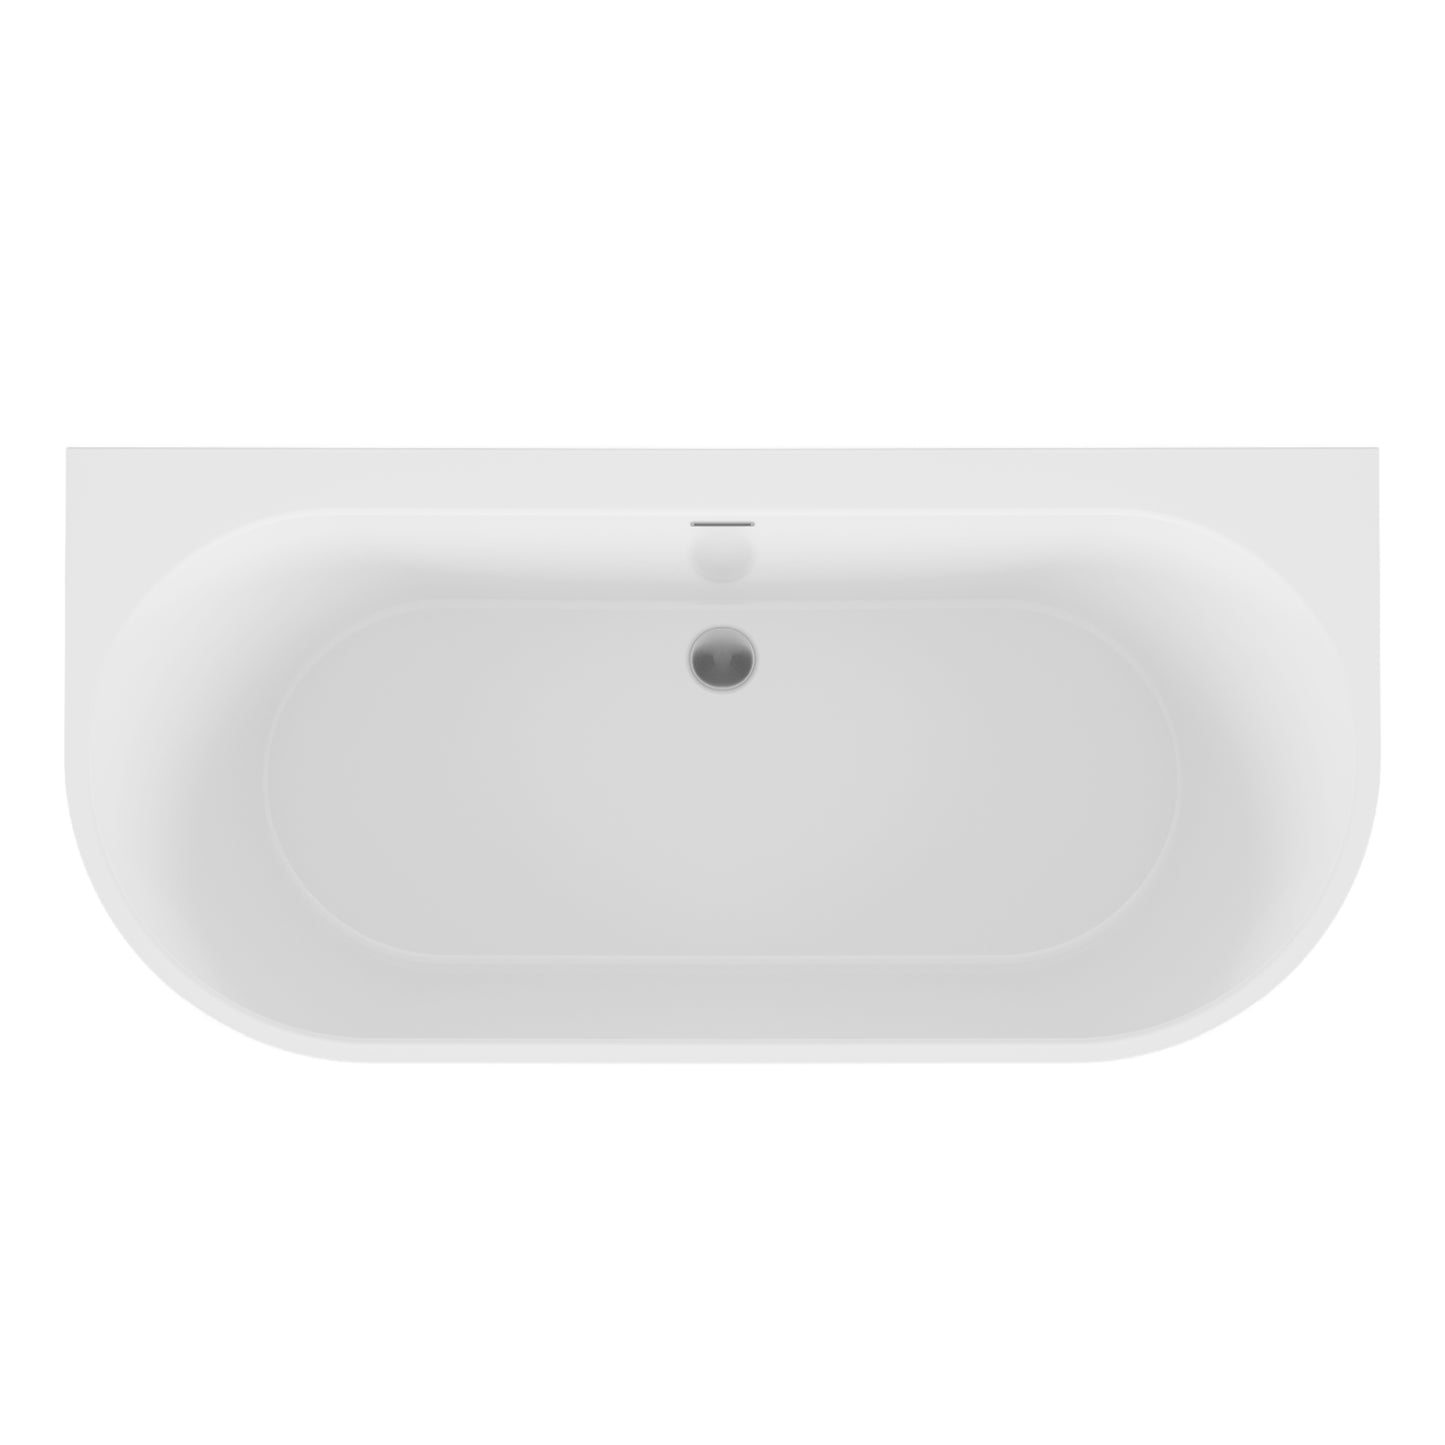 Load image into Gallery viewer, Acrylic freestanding bathtube SOLA 160 x 75 cm
